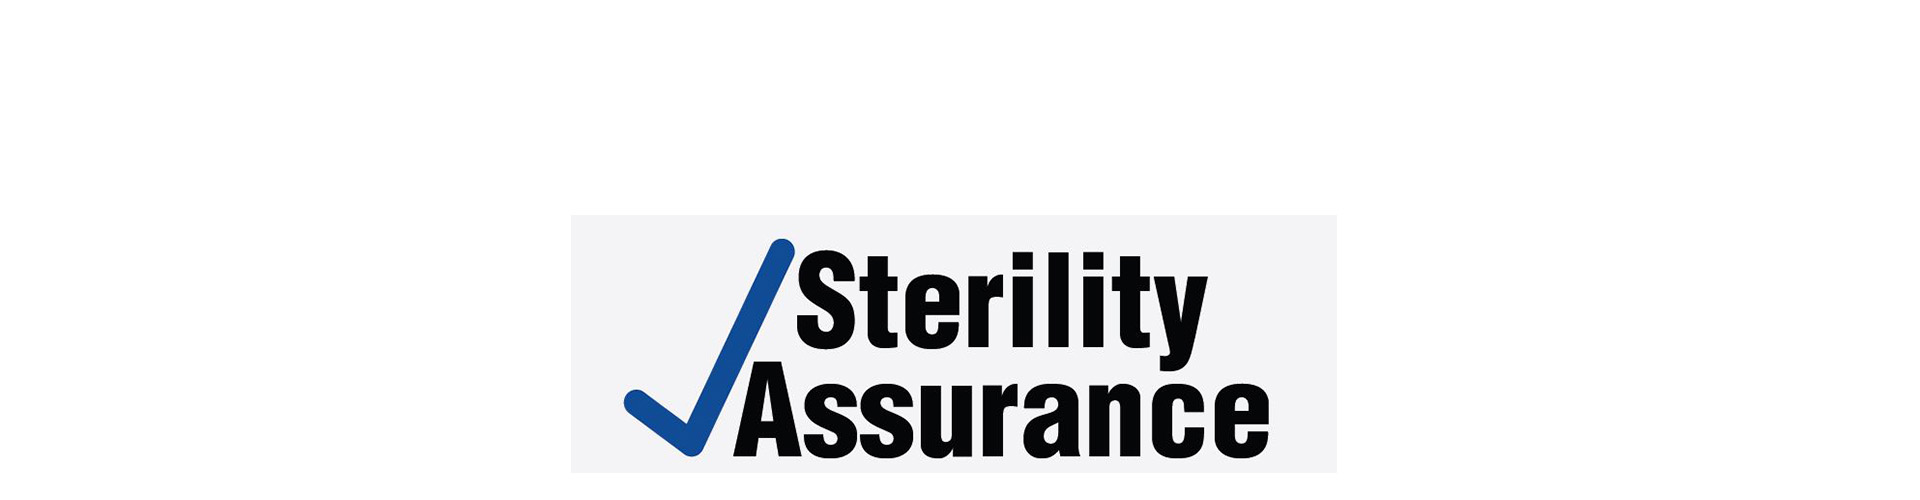 Sterility Assurance